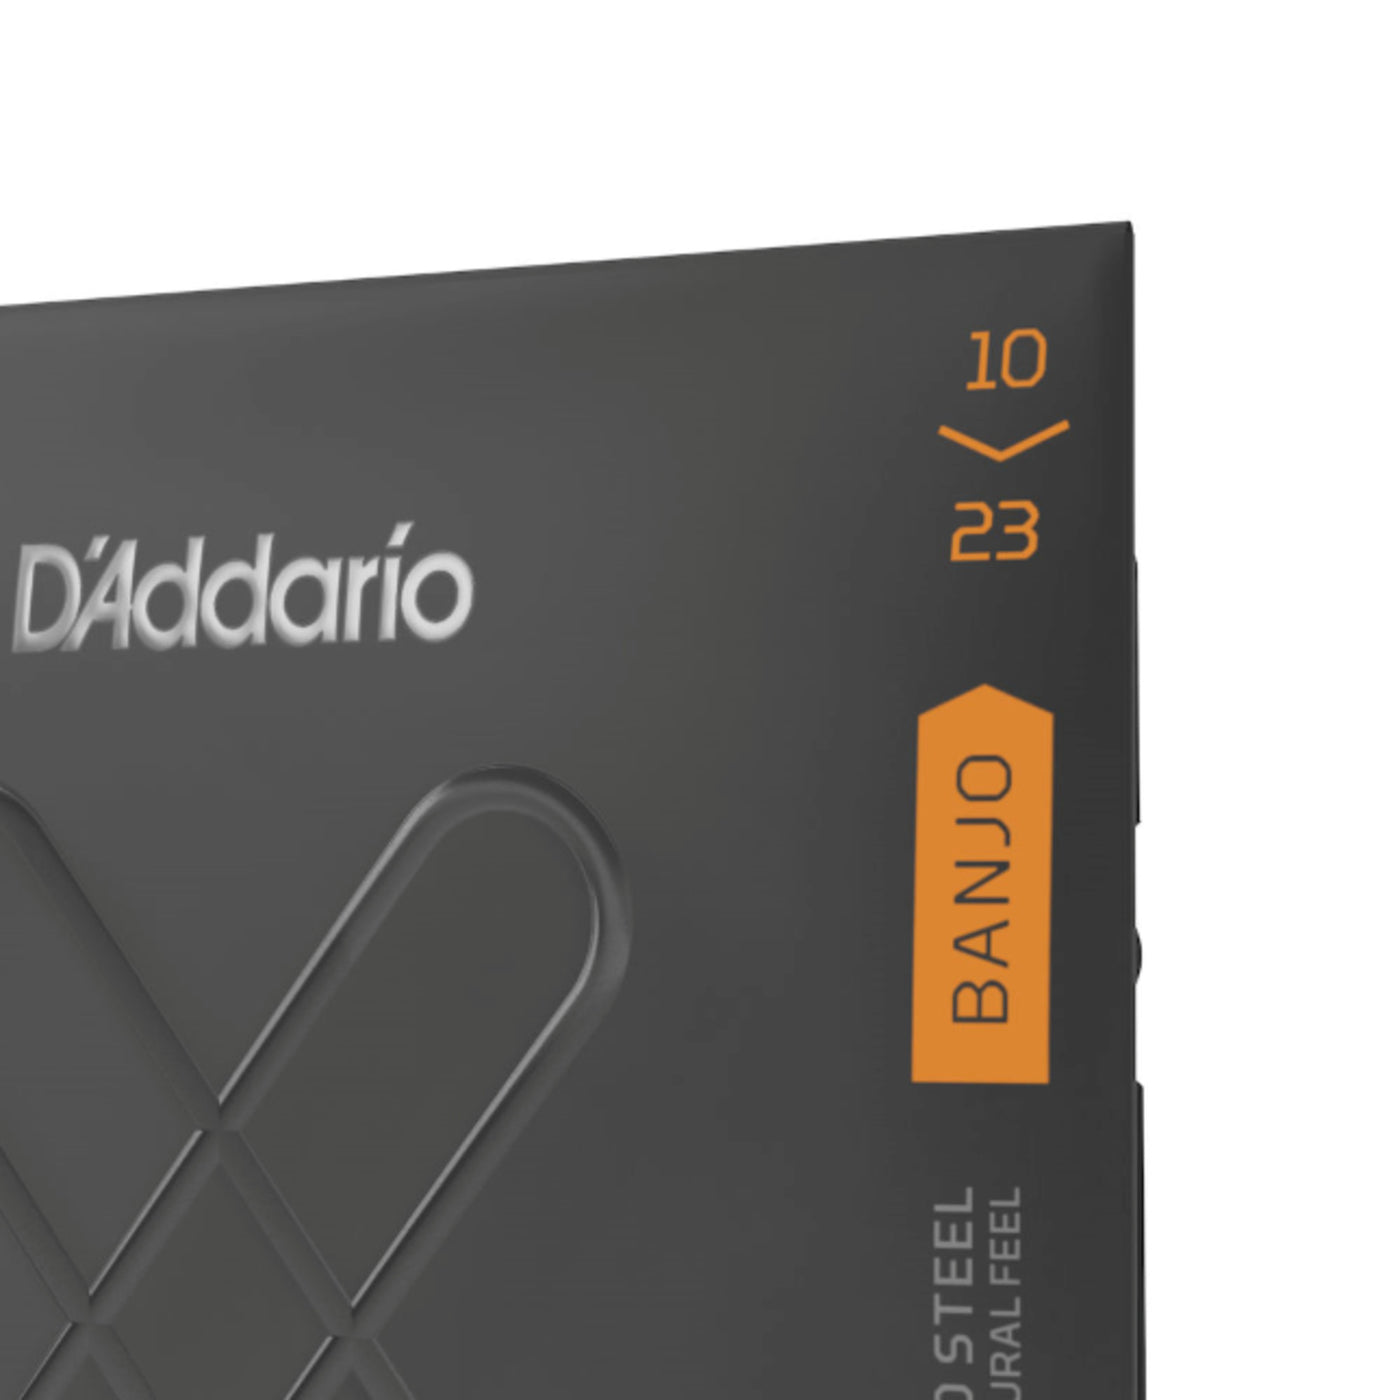 D'Addario XT Stainless Steel Banjo Strings, Medium, 10-23 (XTJ1023)